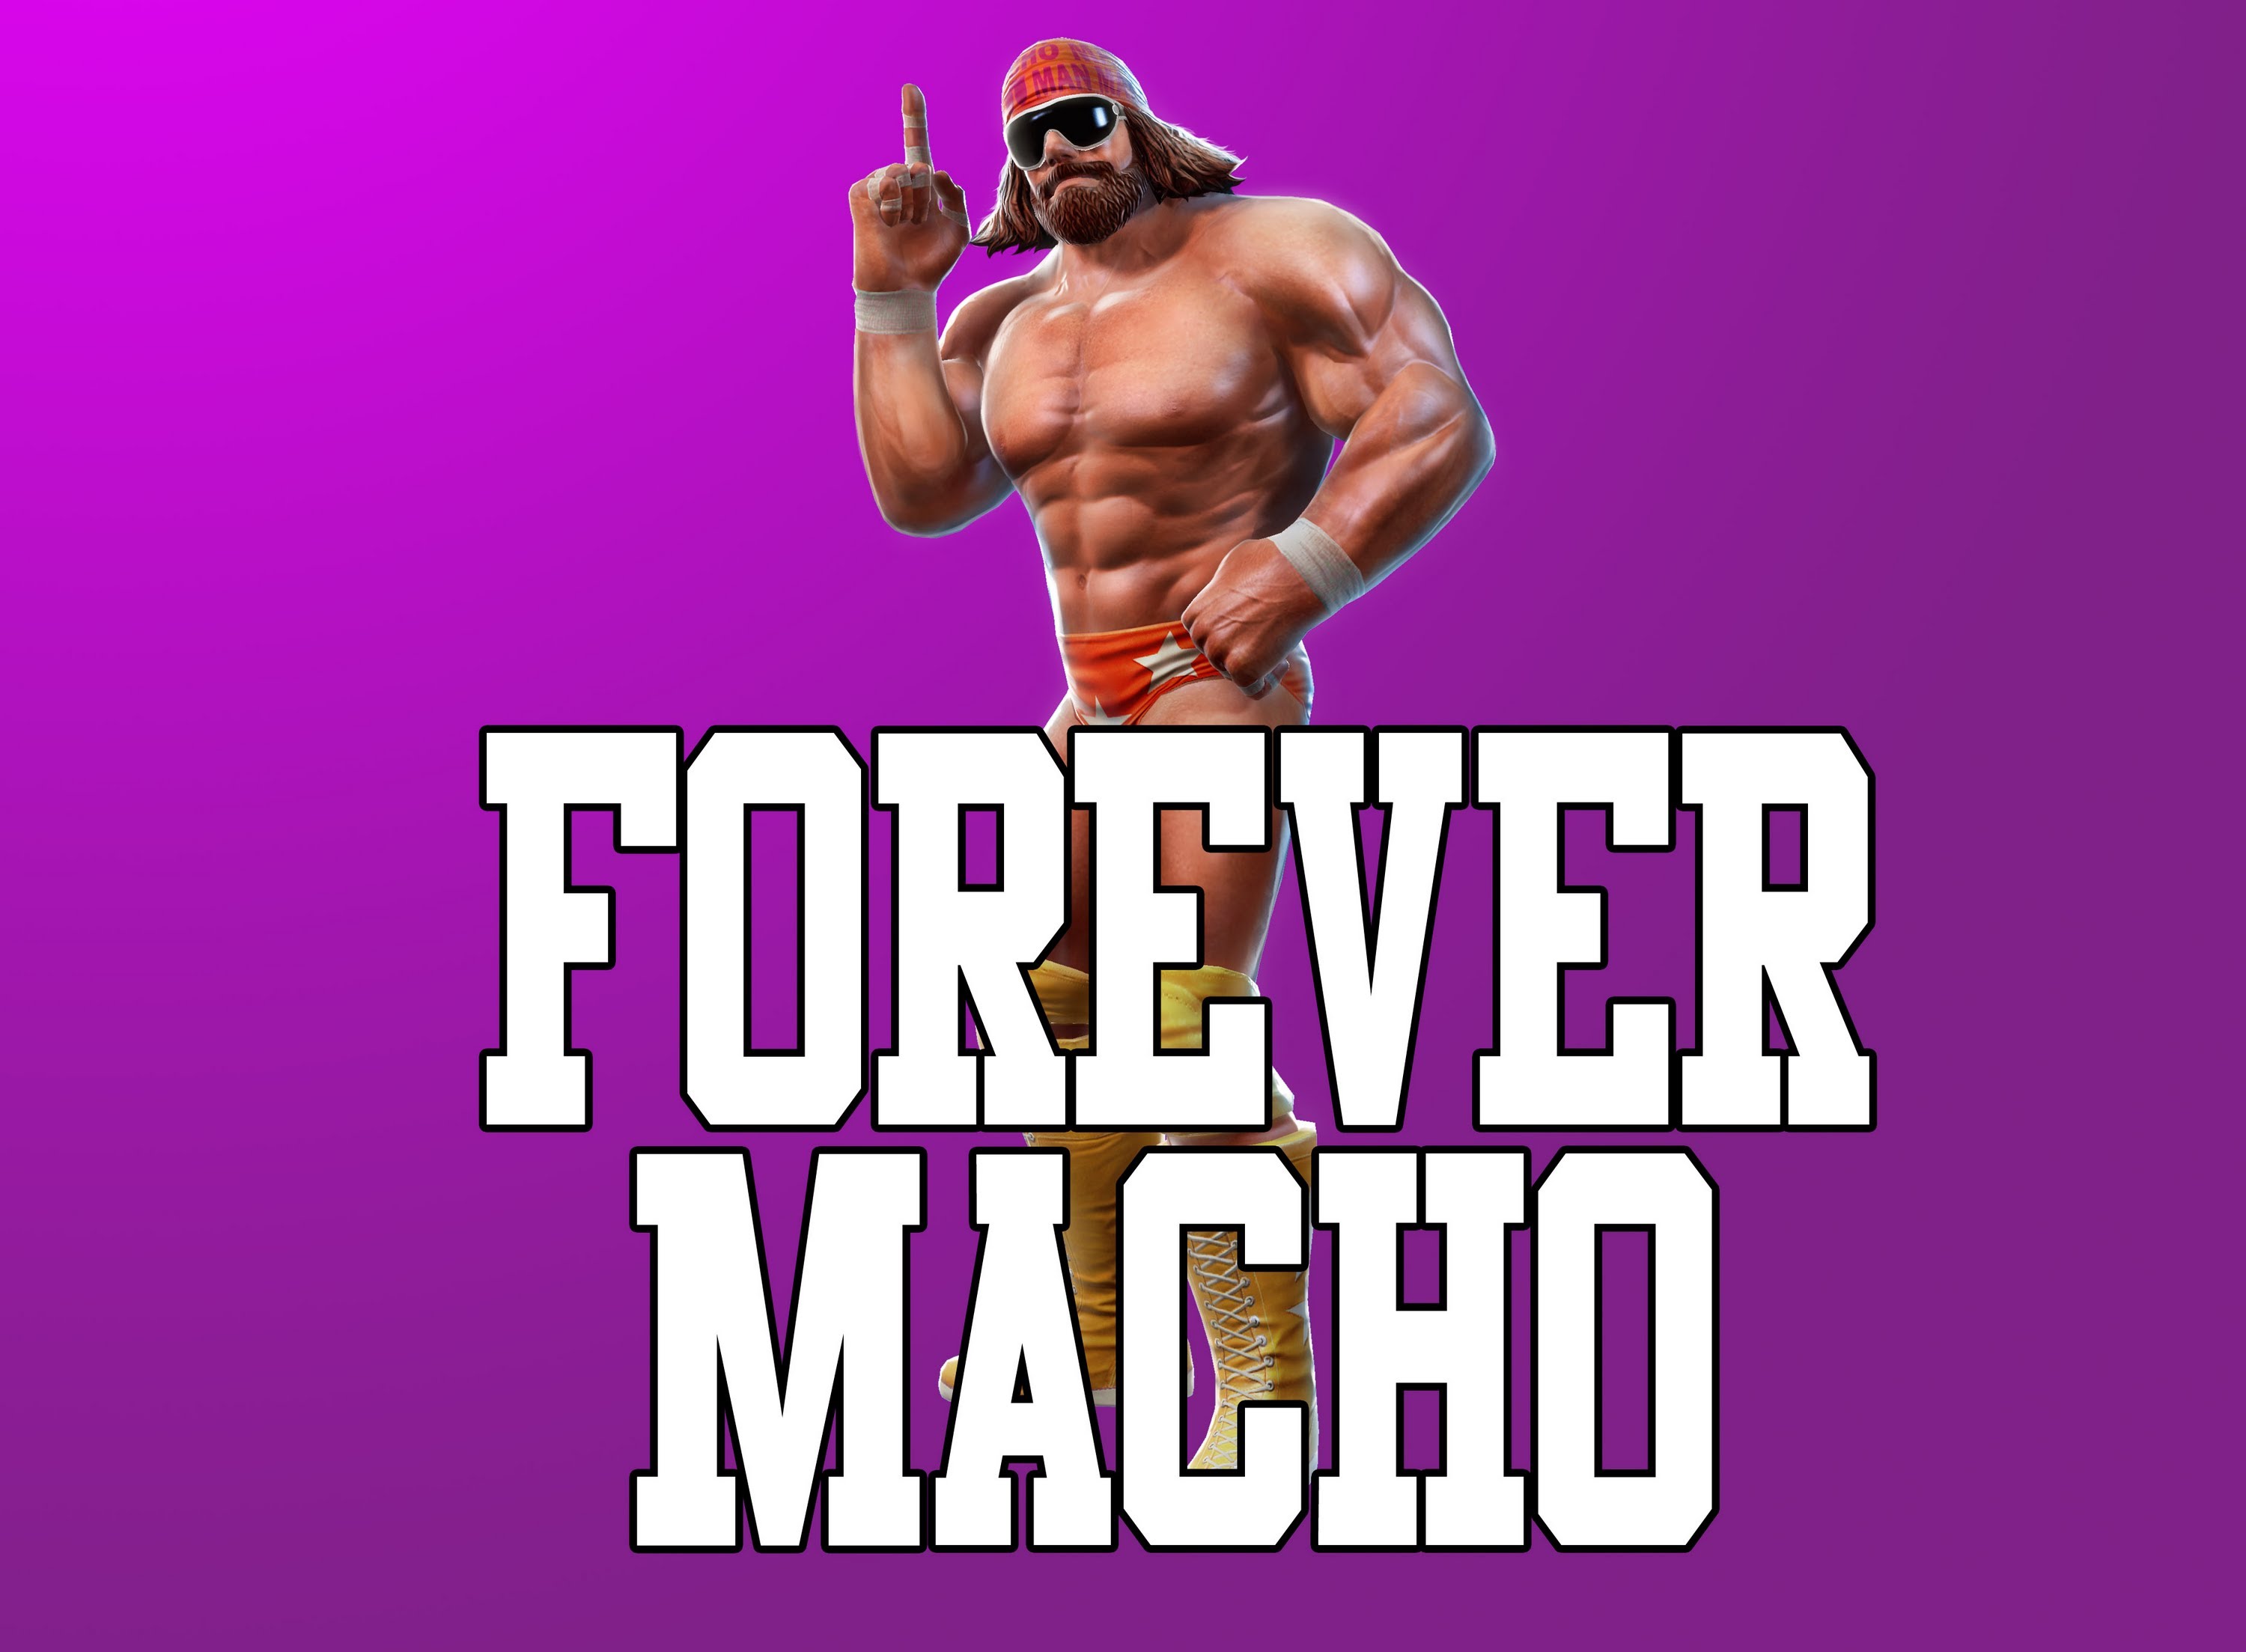 Randy Macho Man Savage Tribute Wwe Smackdown Vs Raw